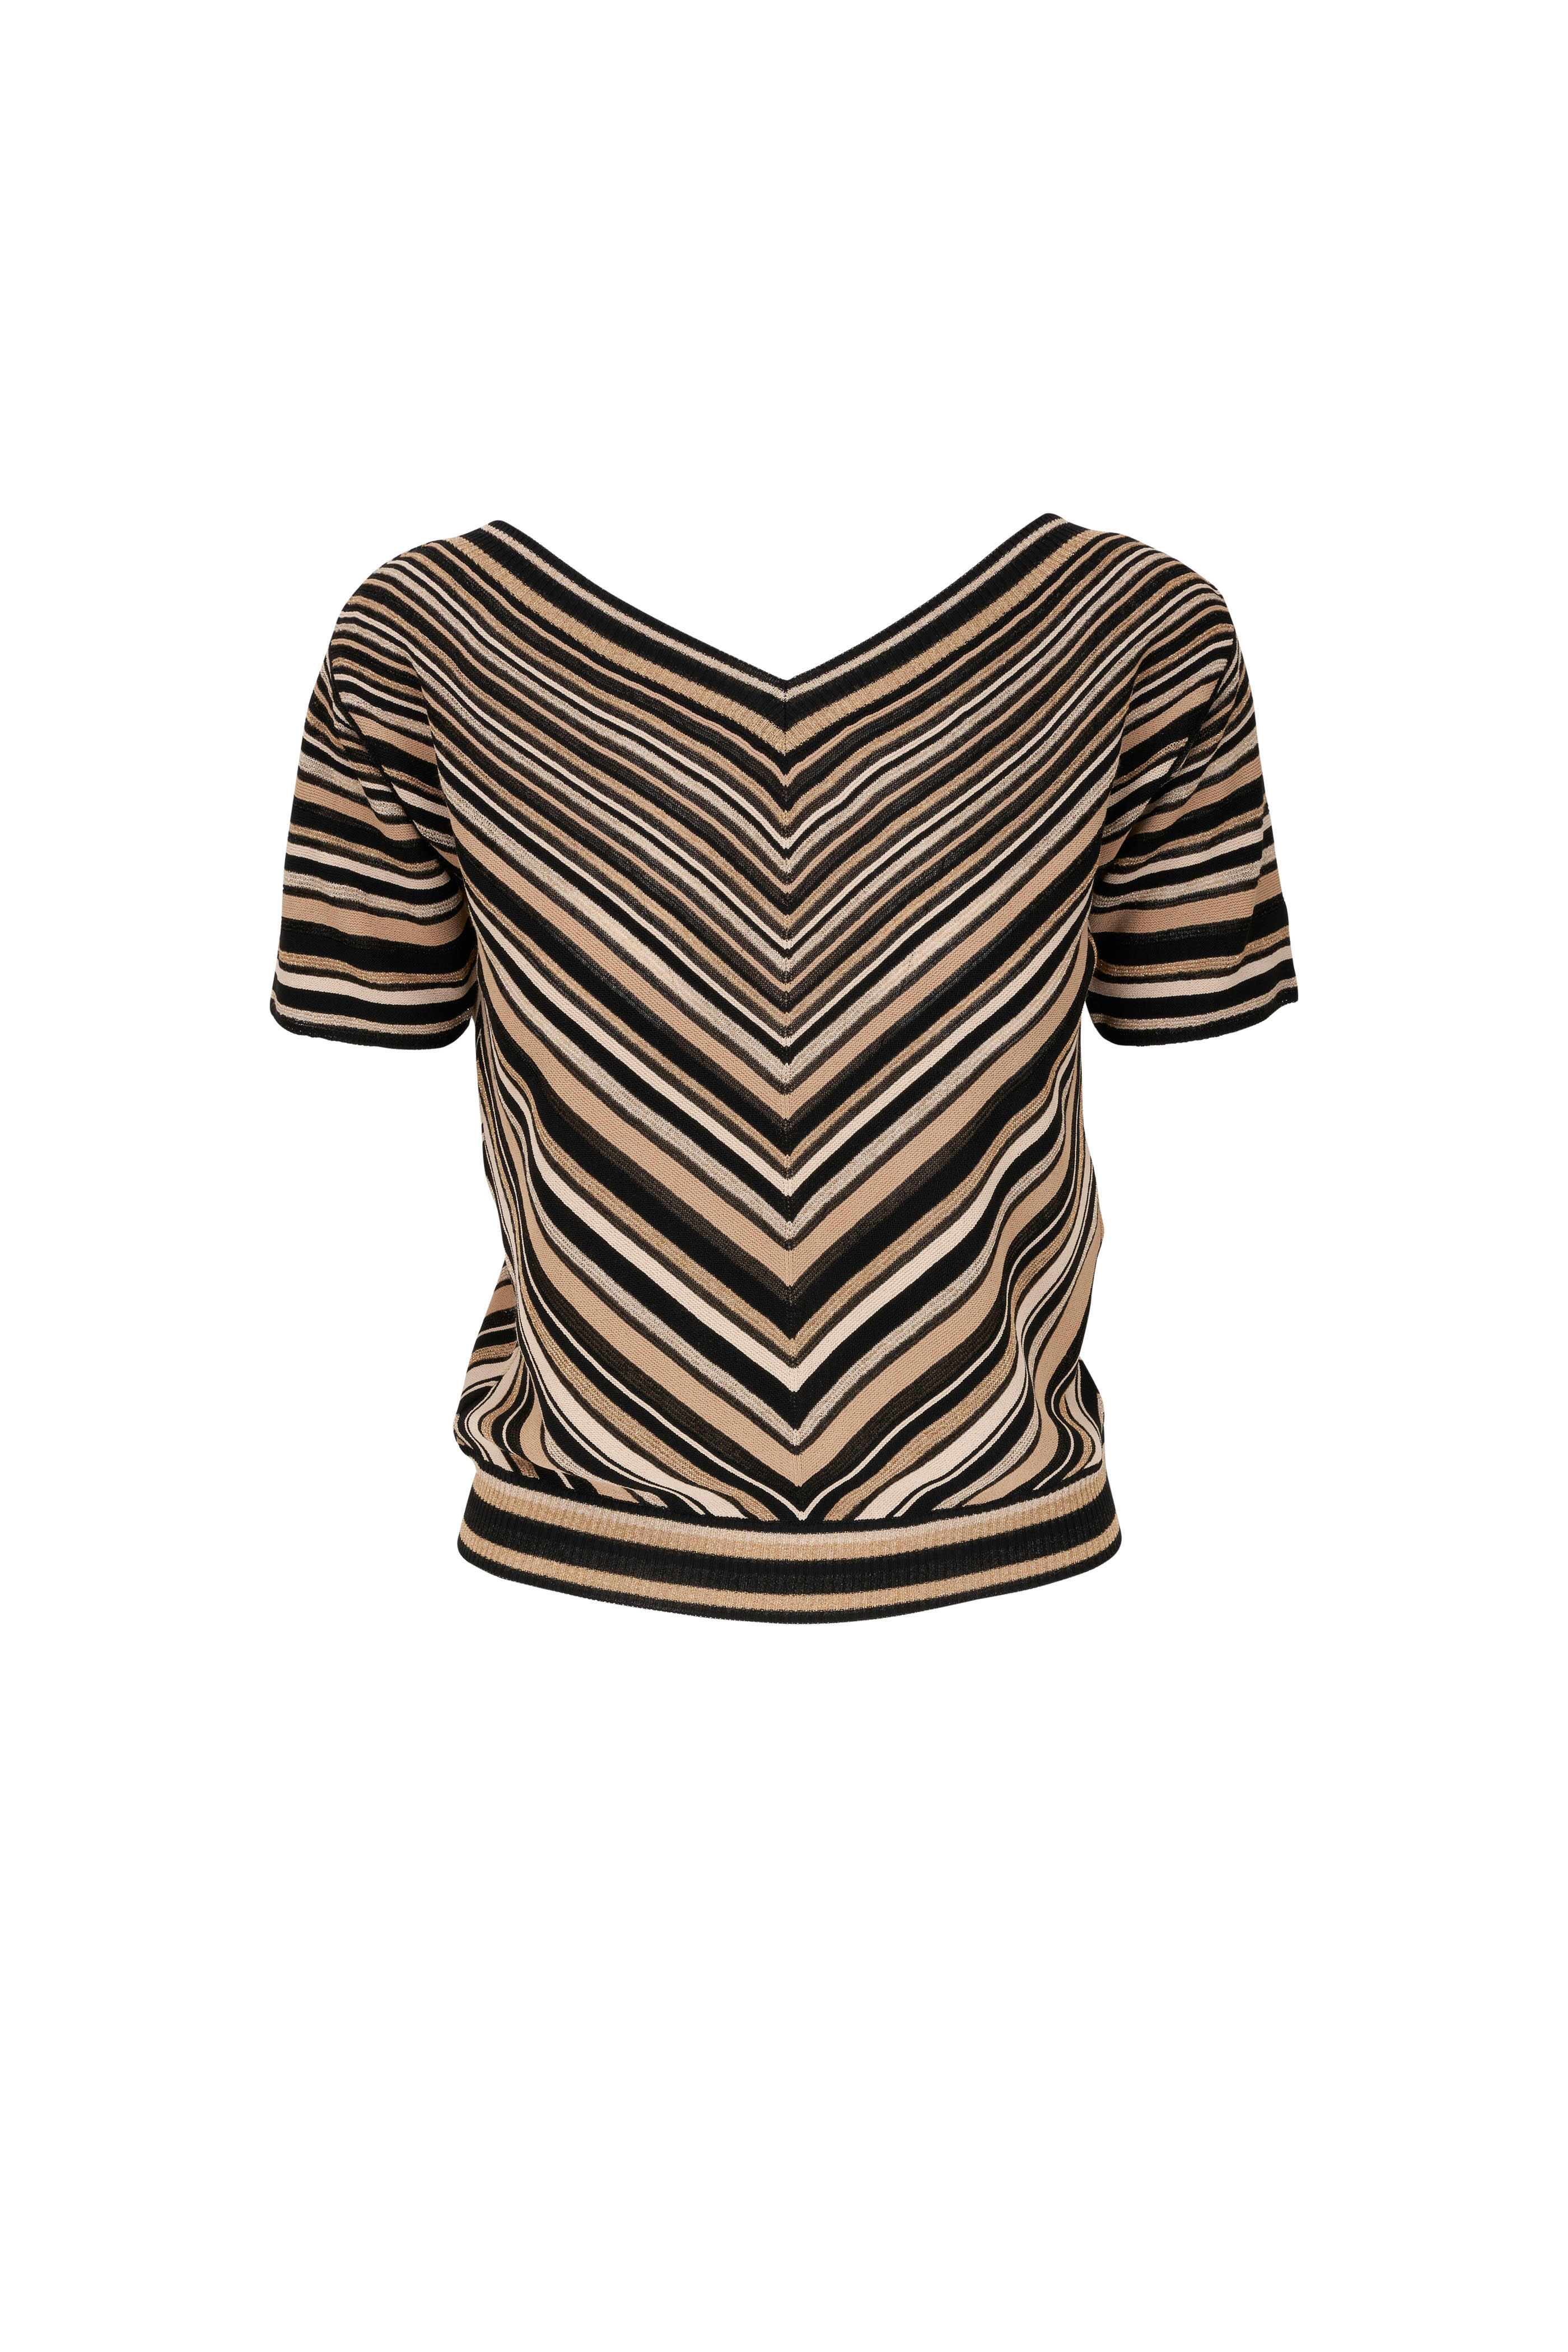 D.Exterior - Gold Black Sleeve & Knit Top Short Lurex Striped